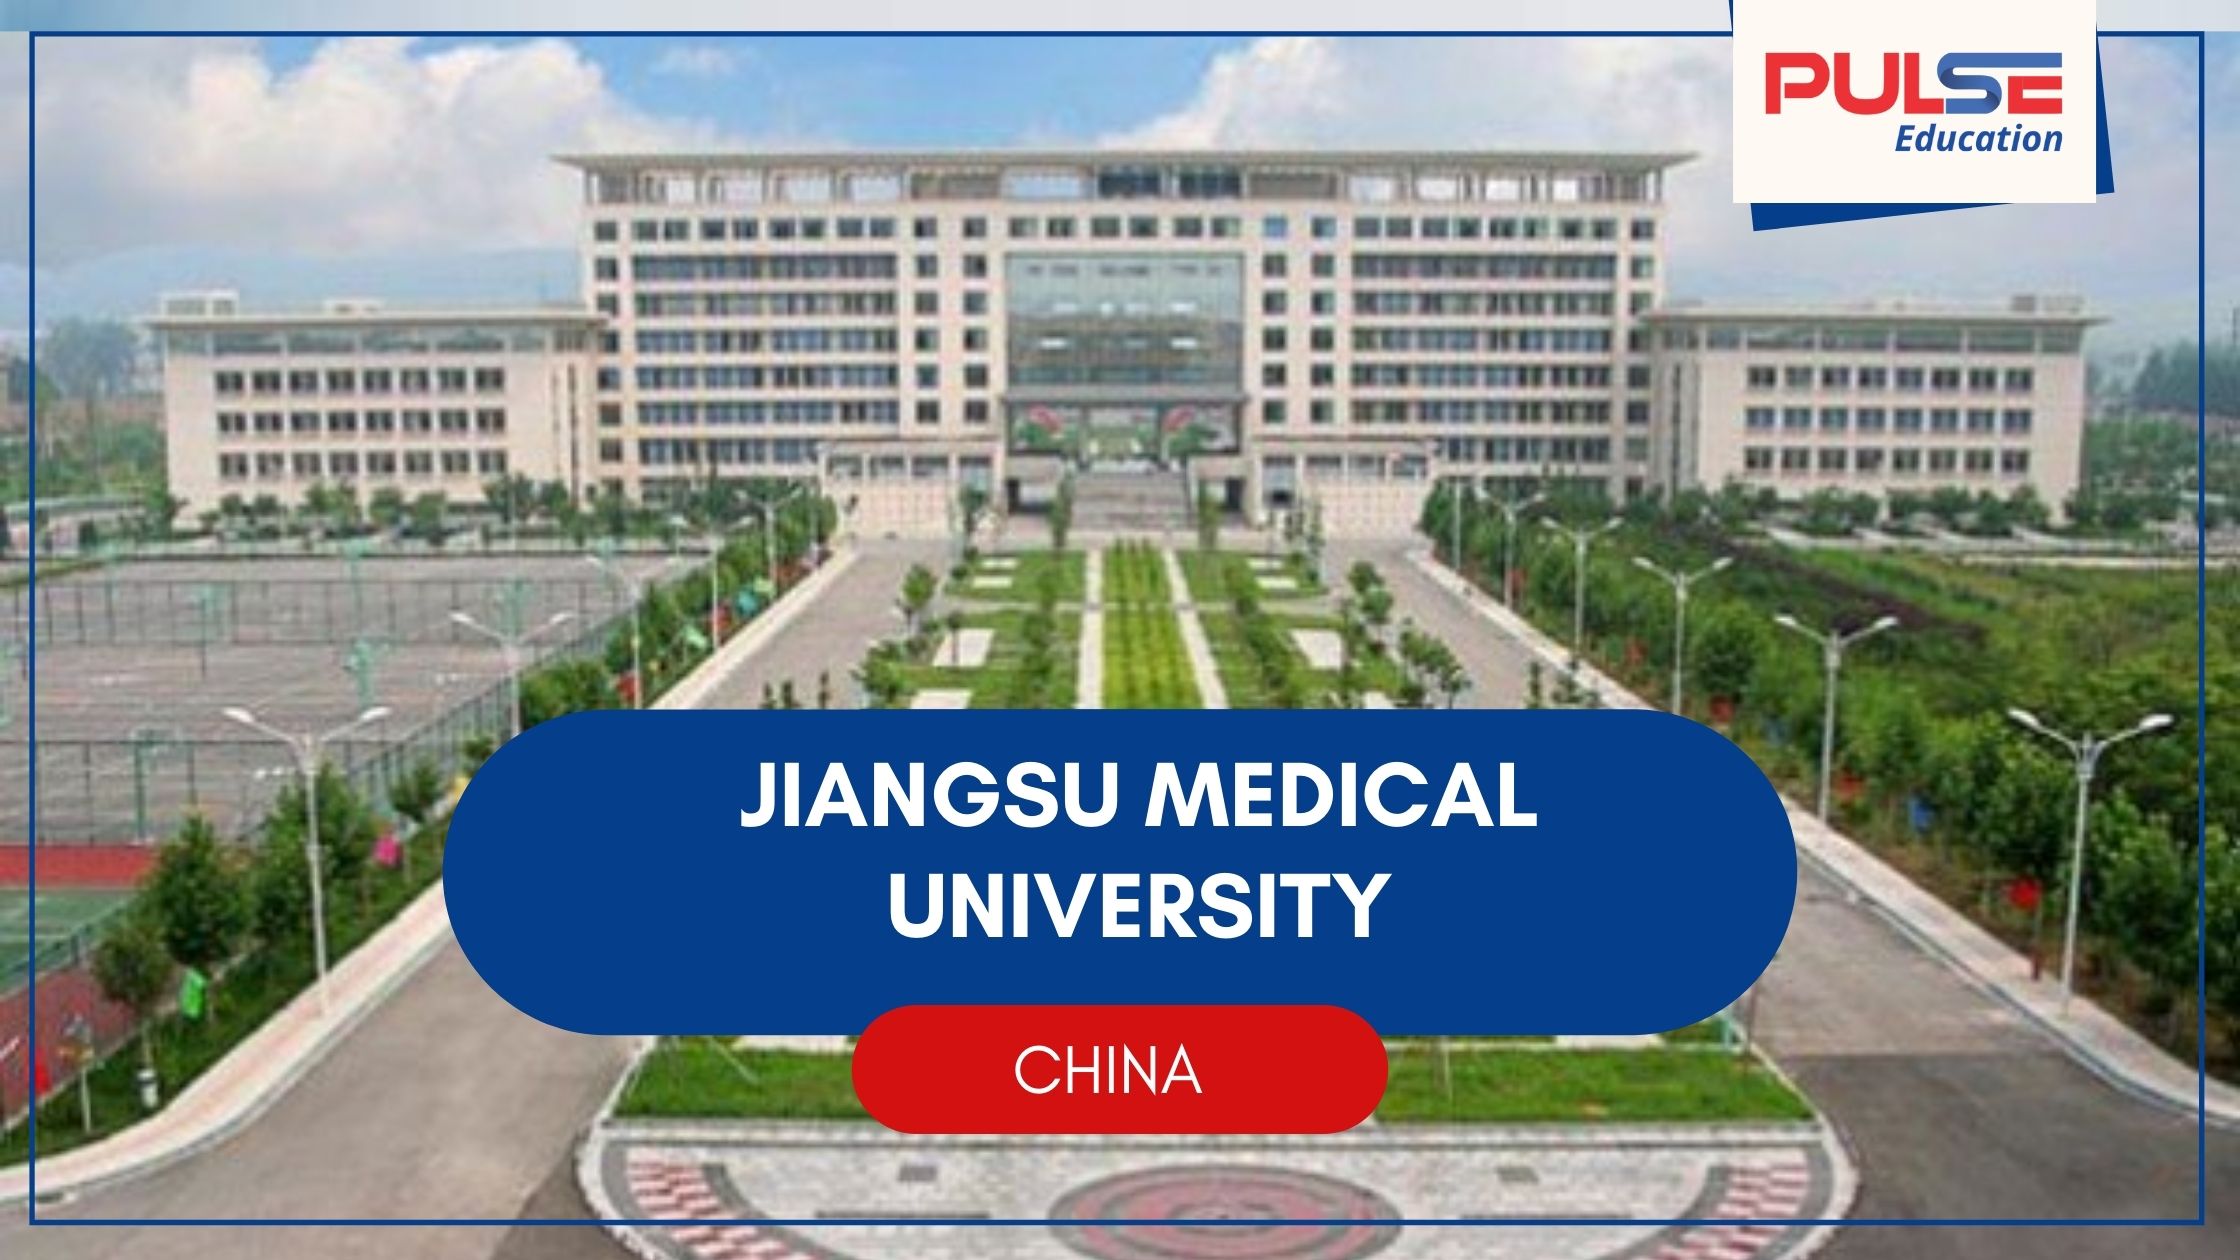 Jiangsu Medical University